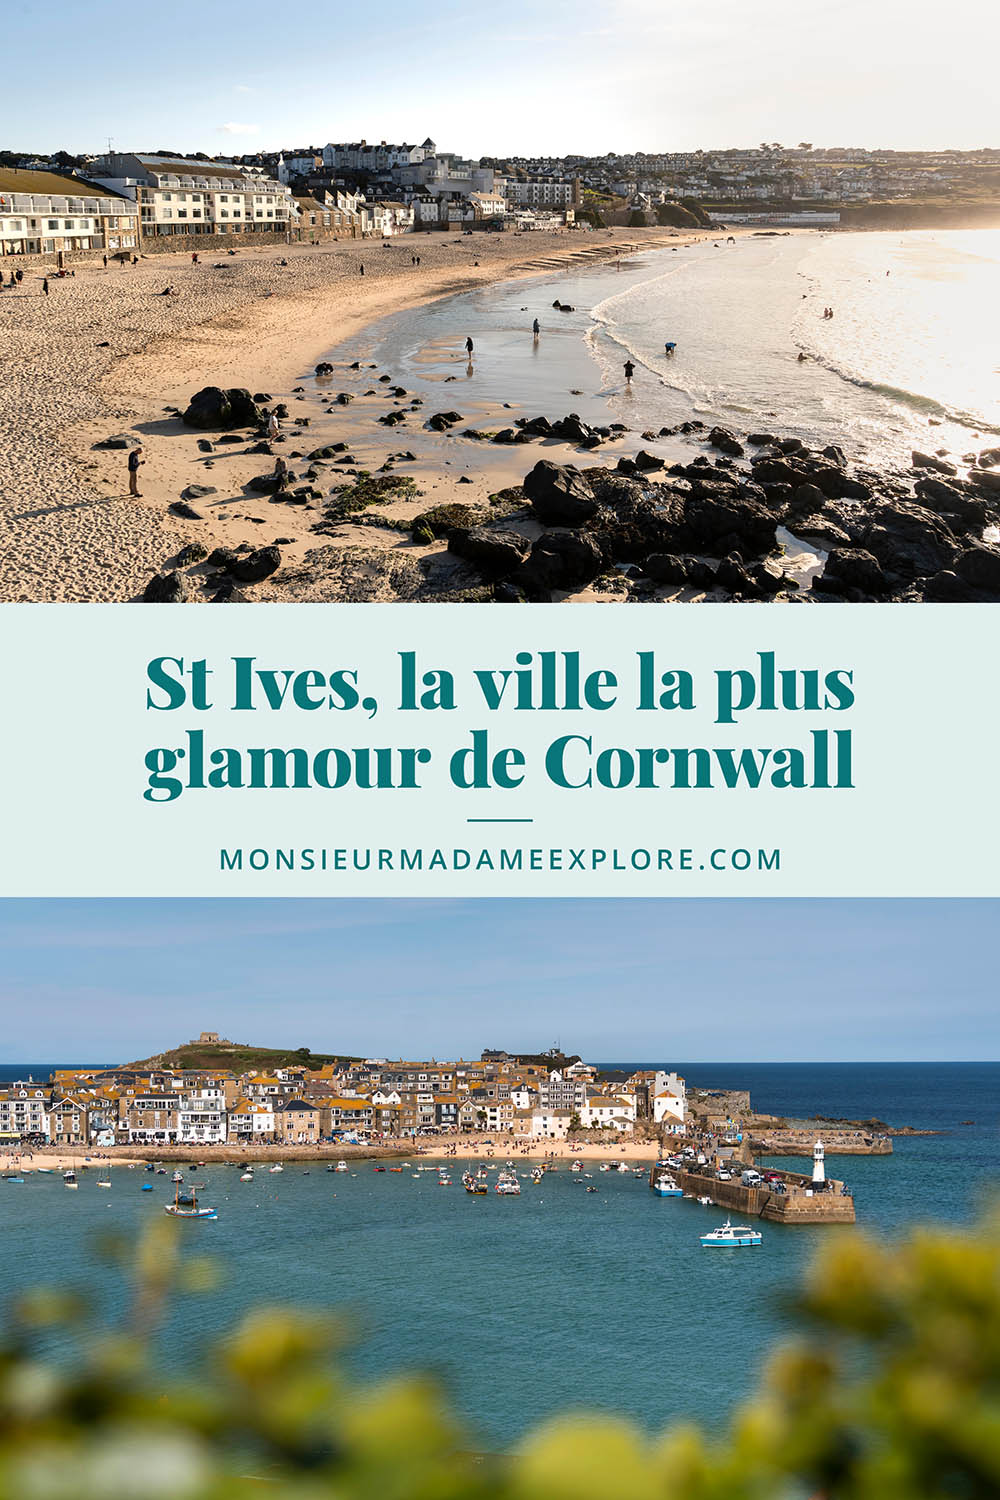 St Ives, la ville la plus glamour de Cornwall, Monsieur+Madame Explore, Blogue de voyage, Cornouailles, Angleterre, UK / All the must-do in St Ives, Cornwall, England, UK